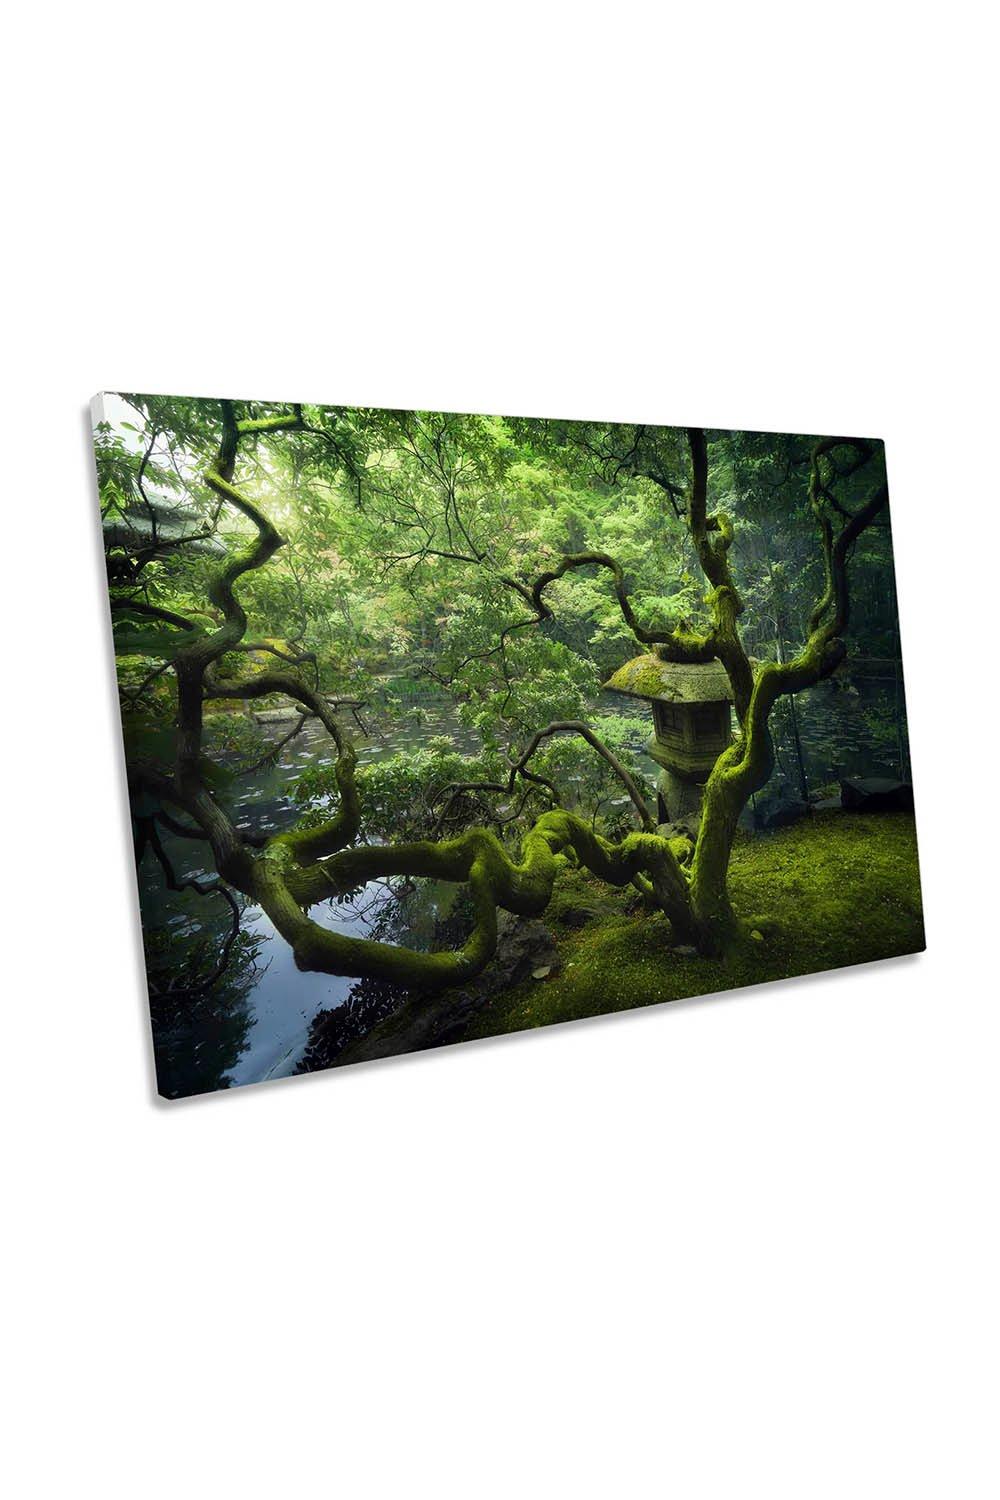 Japan Green Tree Zen Garden Canvas Wall Art Picture Print